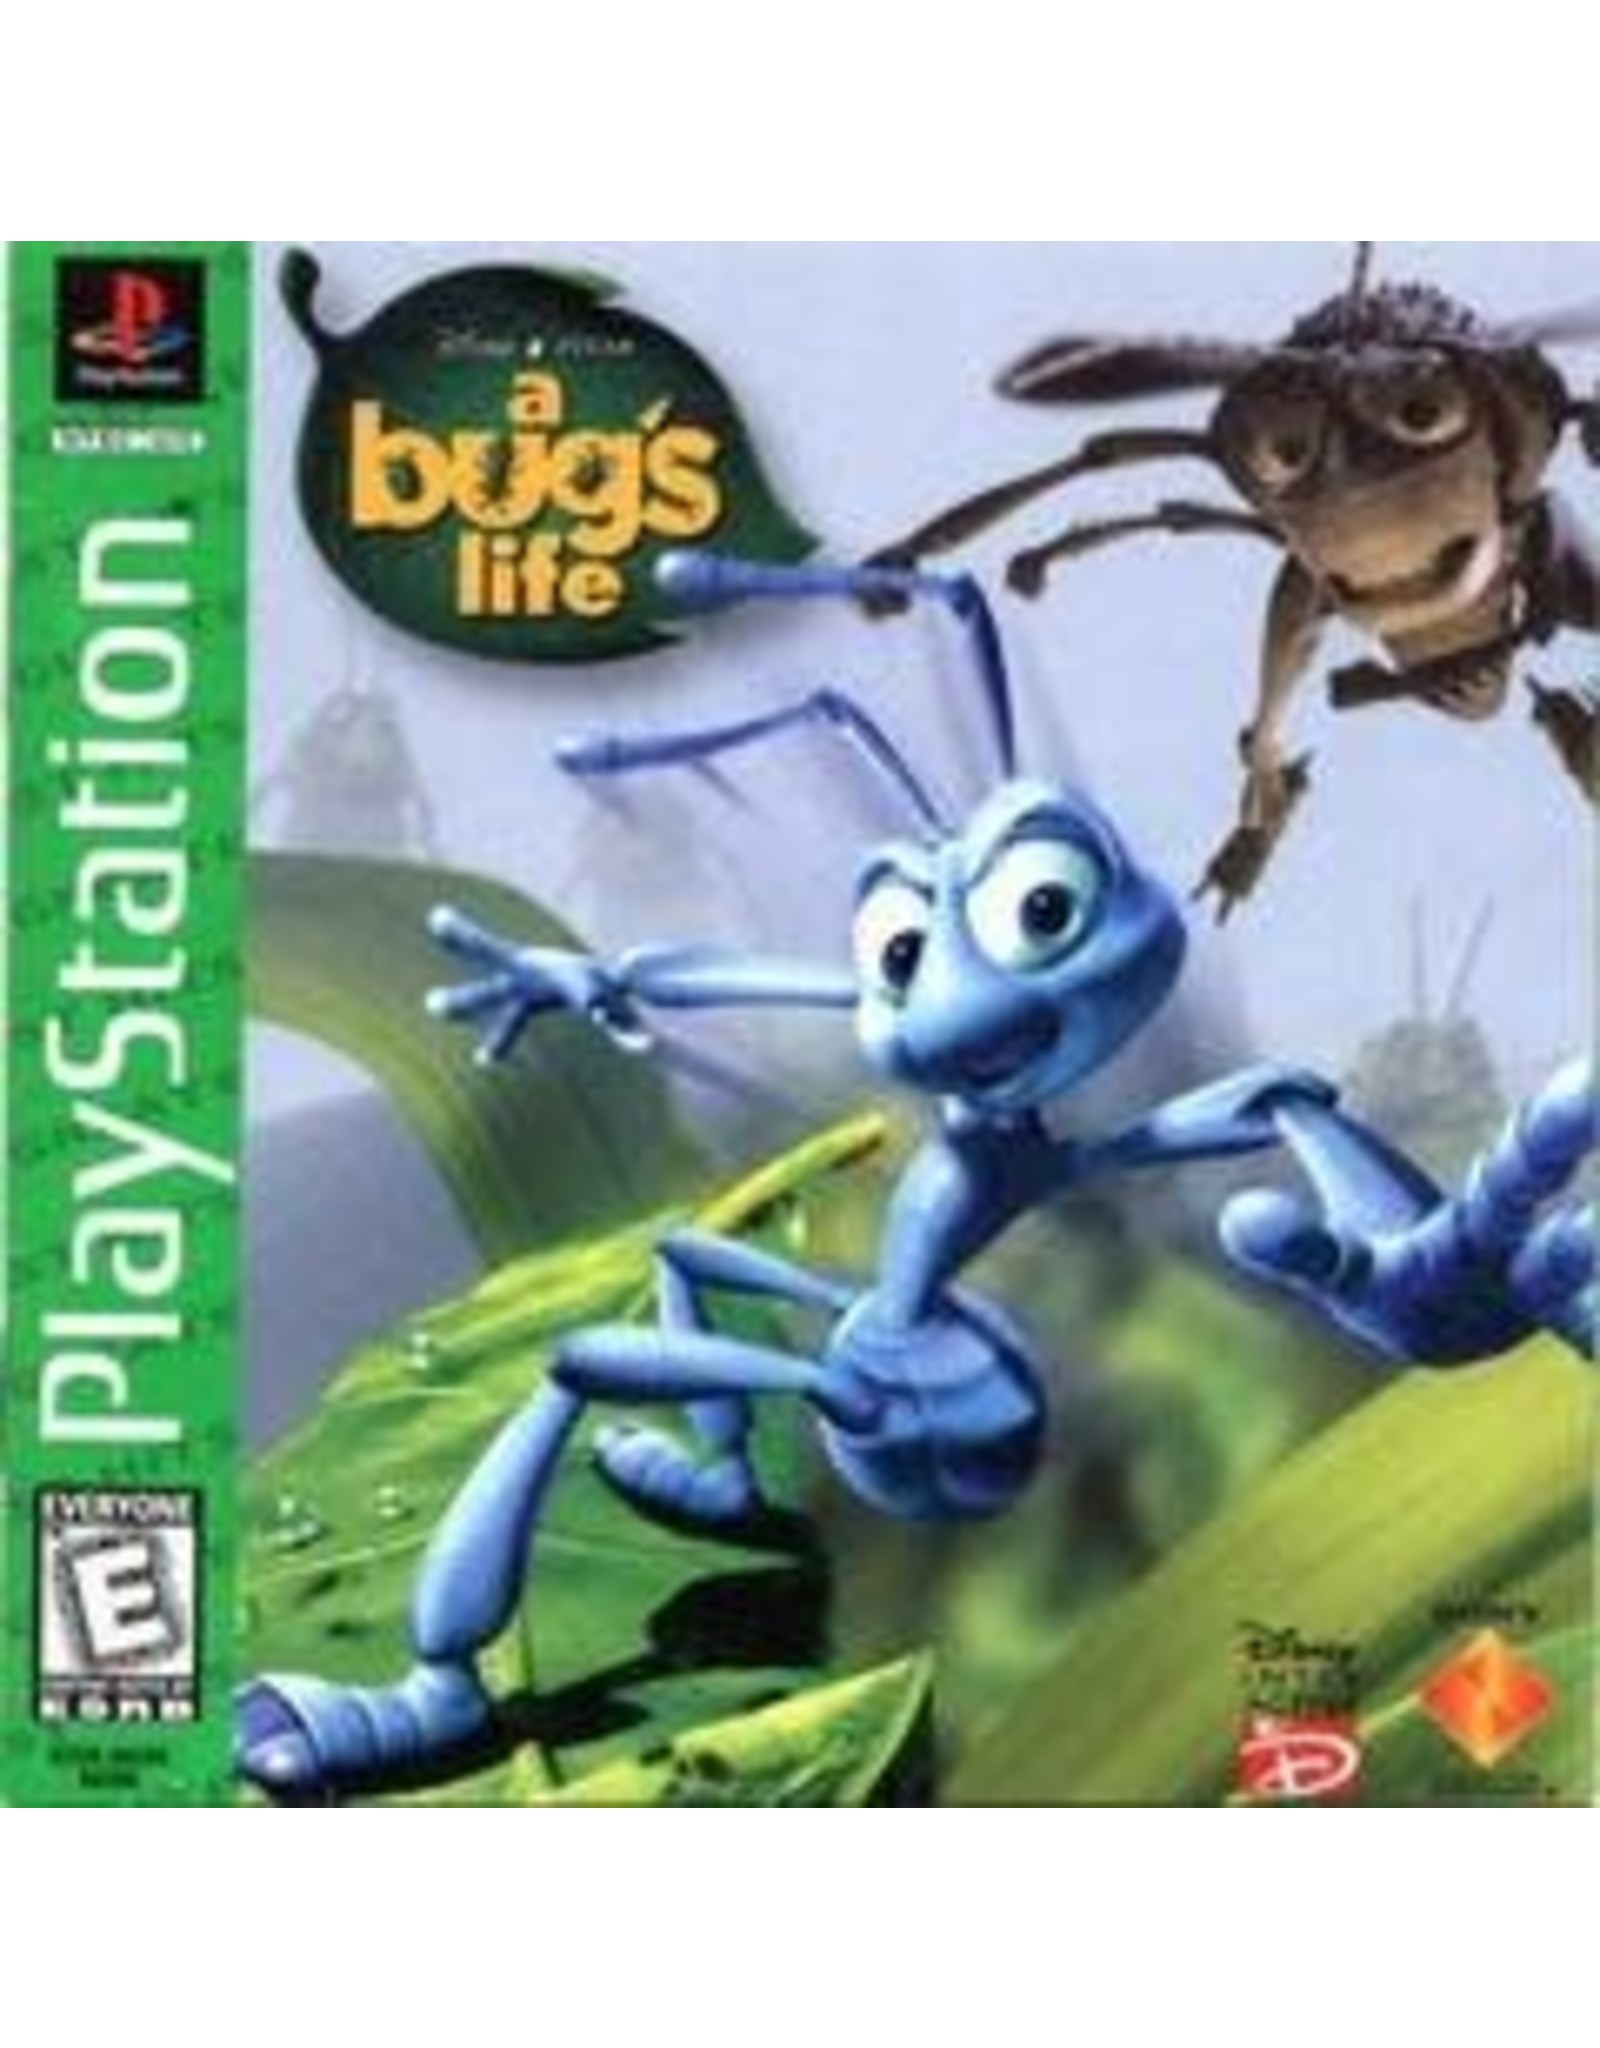 Playstation A Bug's Life (Greatest Hits, CiB)